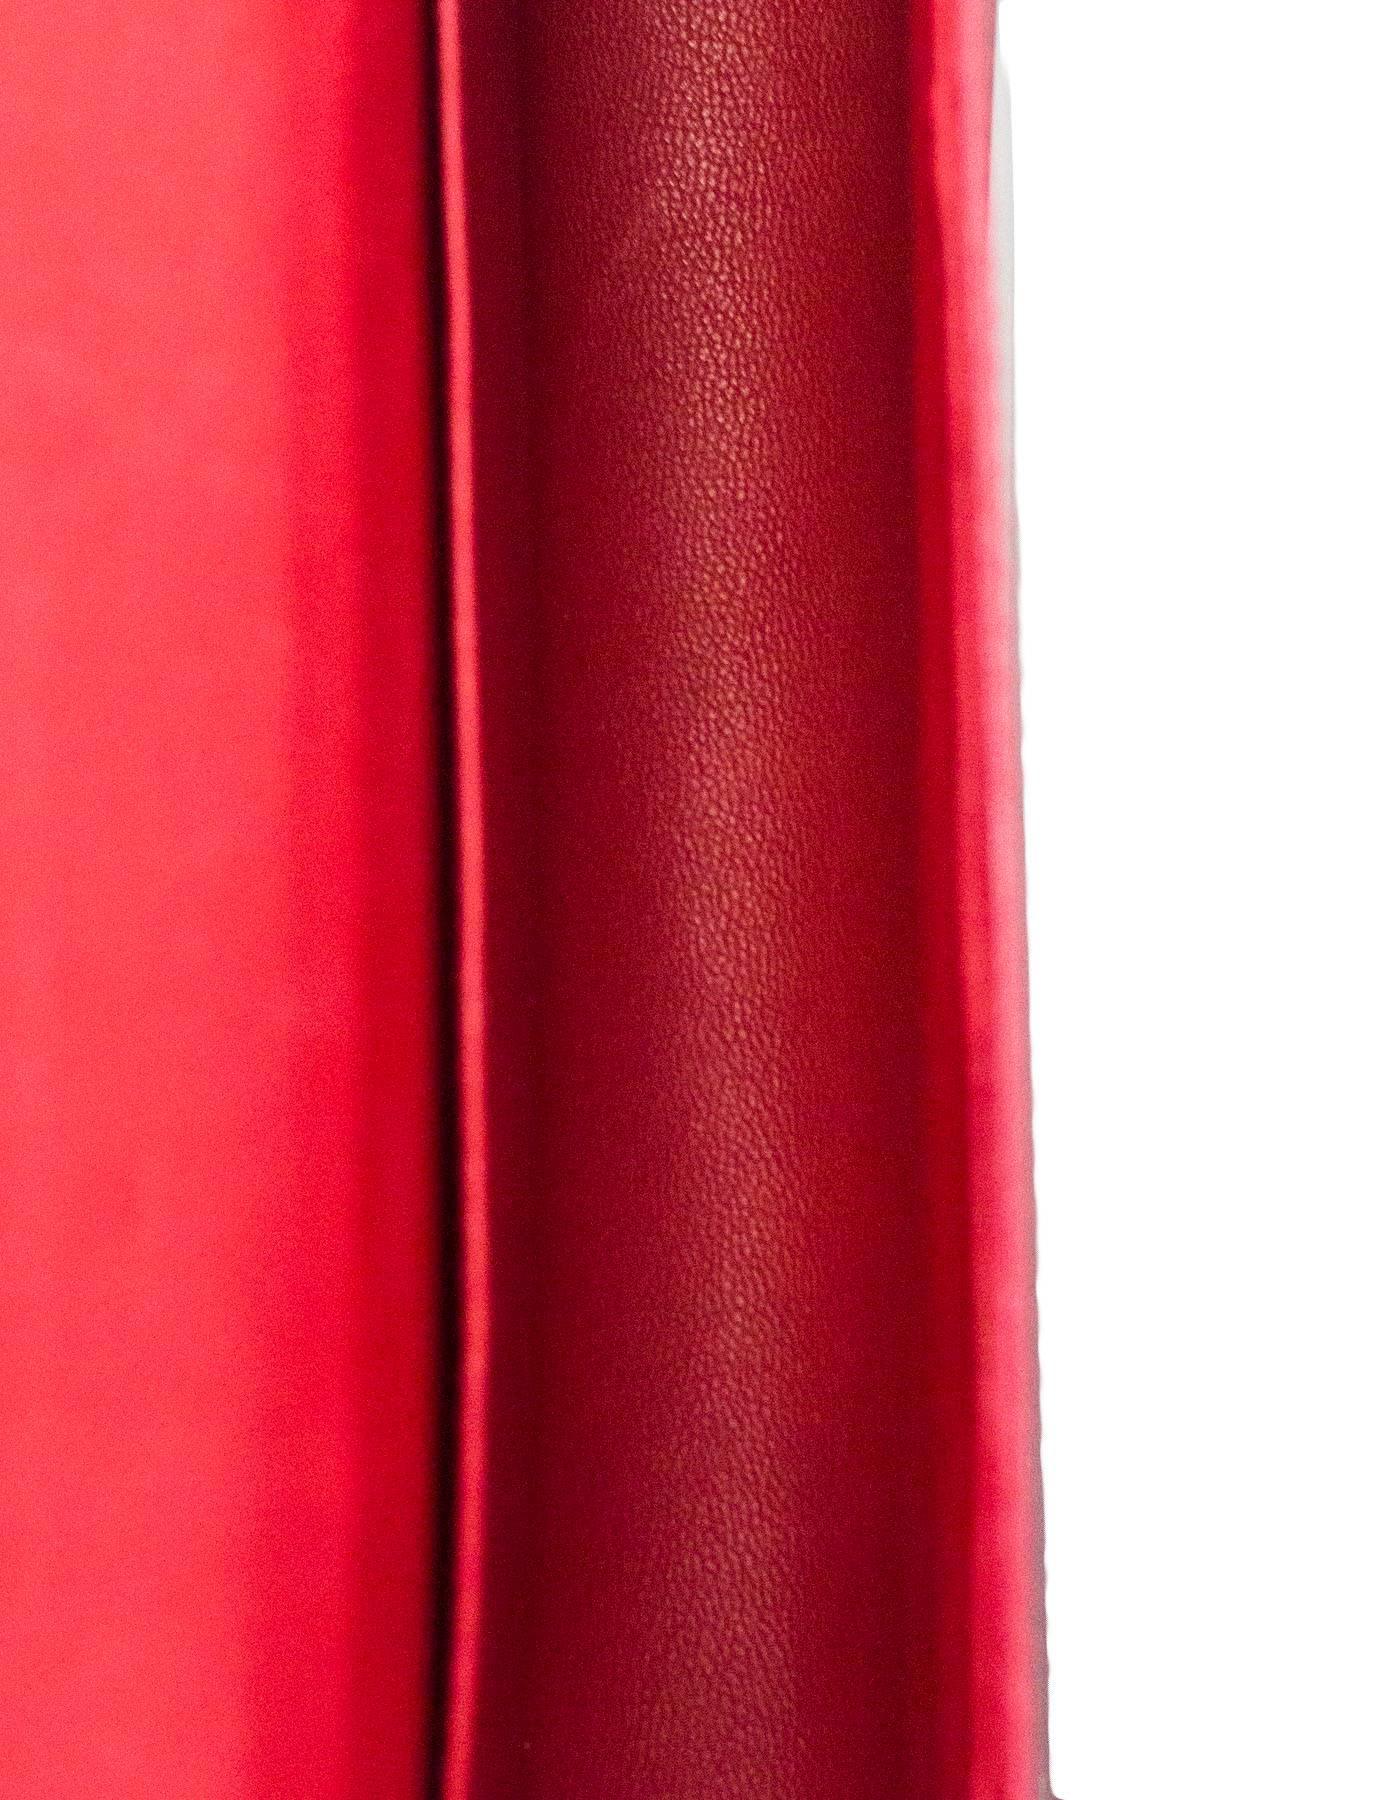 Perrin Red Leather L'Eiffel Glove Clutch with DB 1